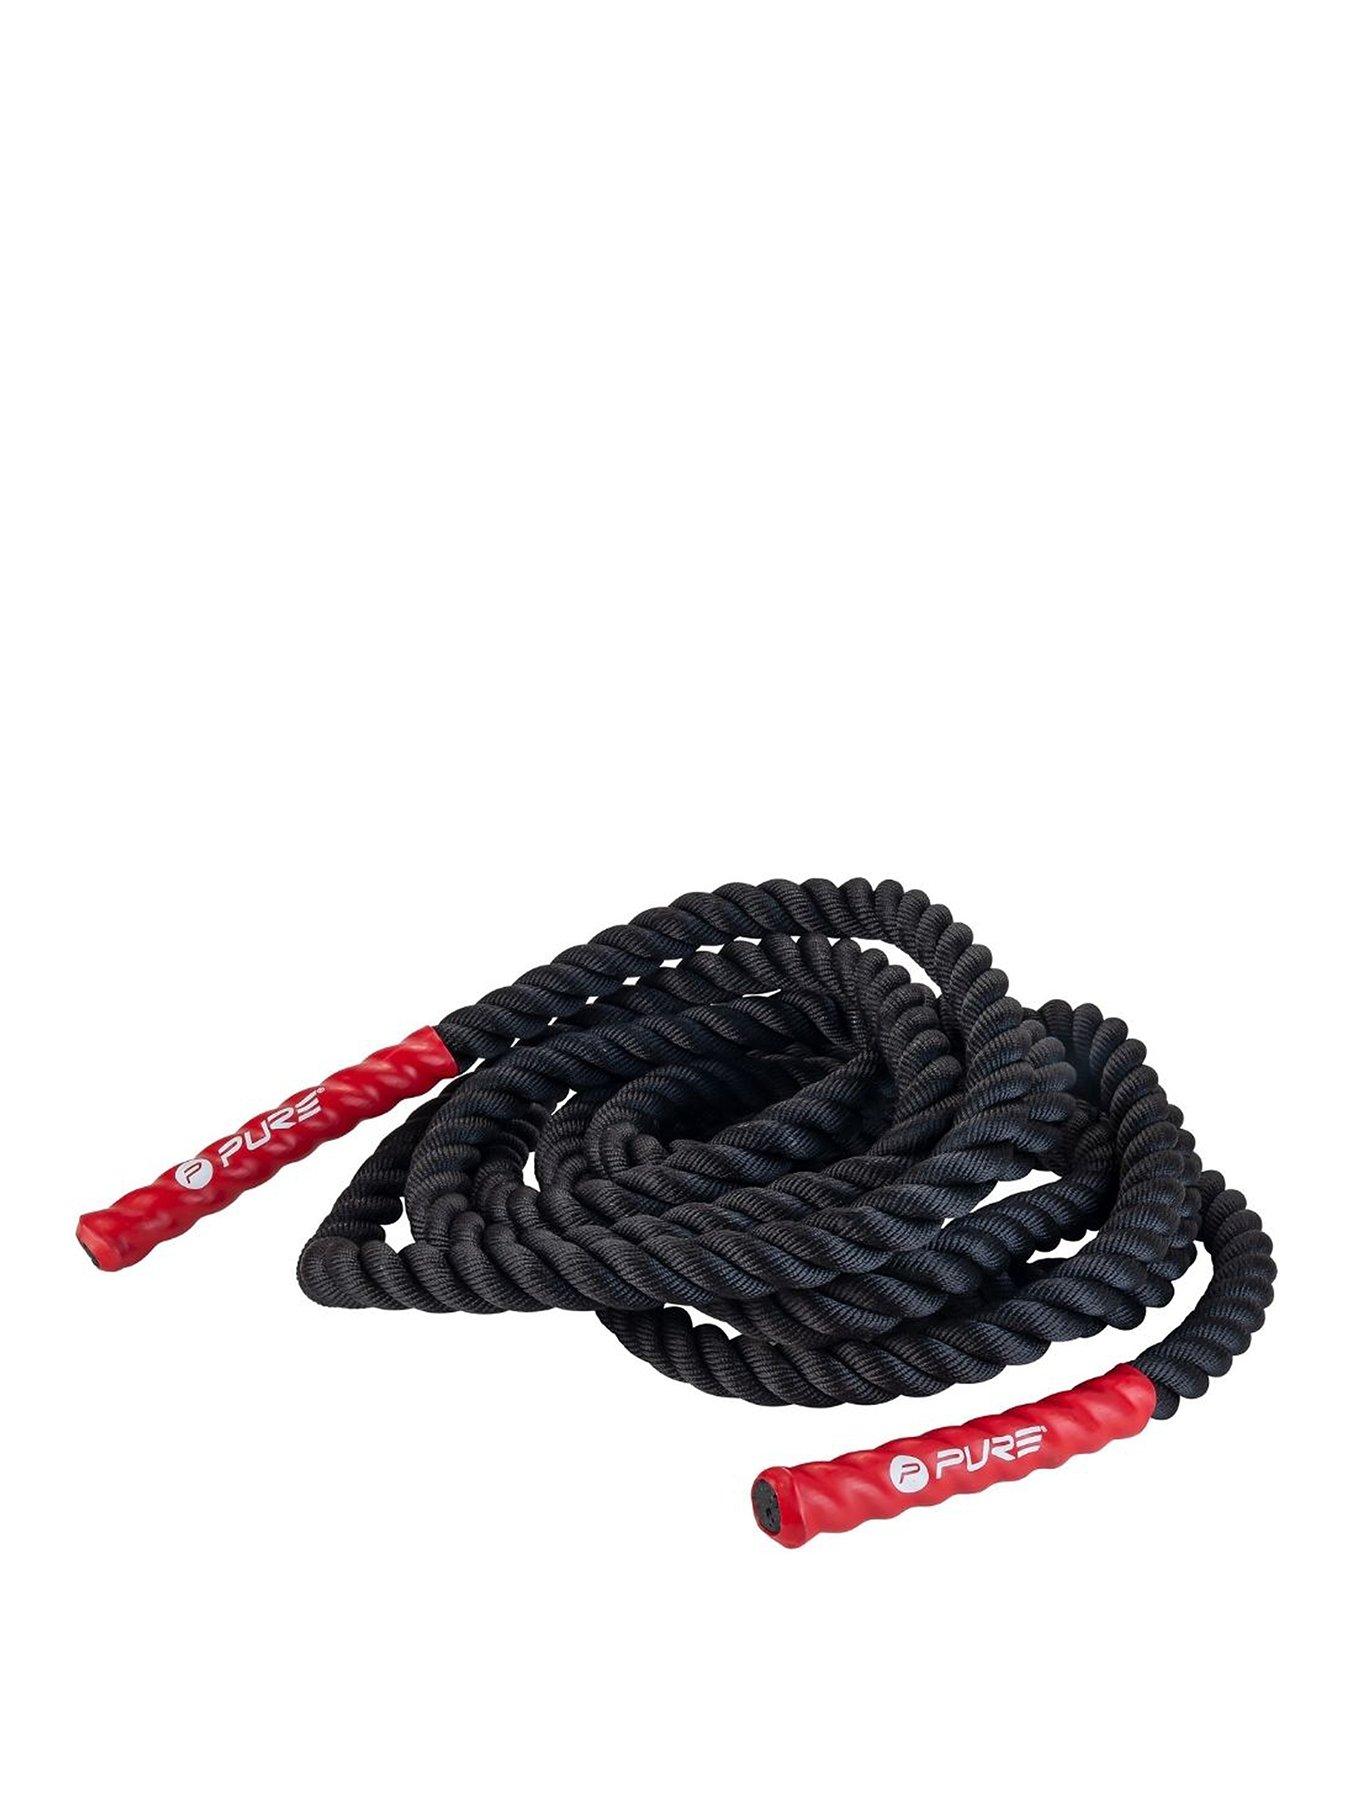 https://media.very.ie/i/littlewoodsireland/RJUVX_SQ1_0000000099_N_A_SLf/pure2improve-full-body-workout-battle-rope.jpg?$180x240_retinamobilex2$